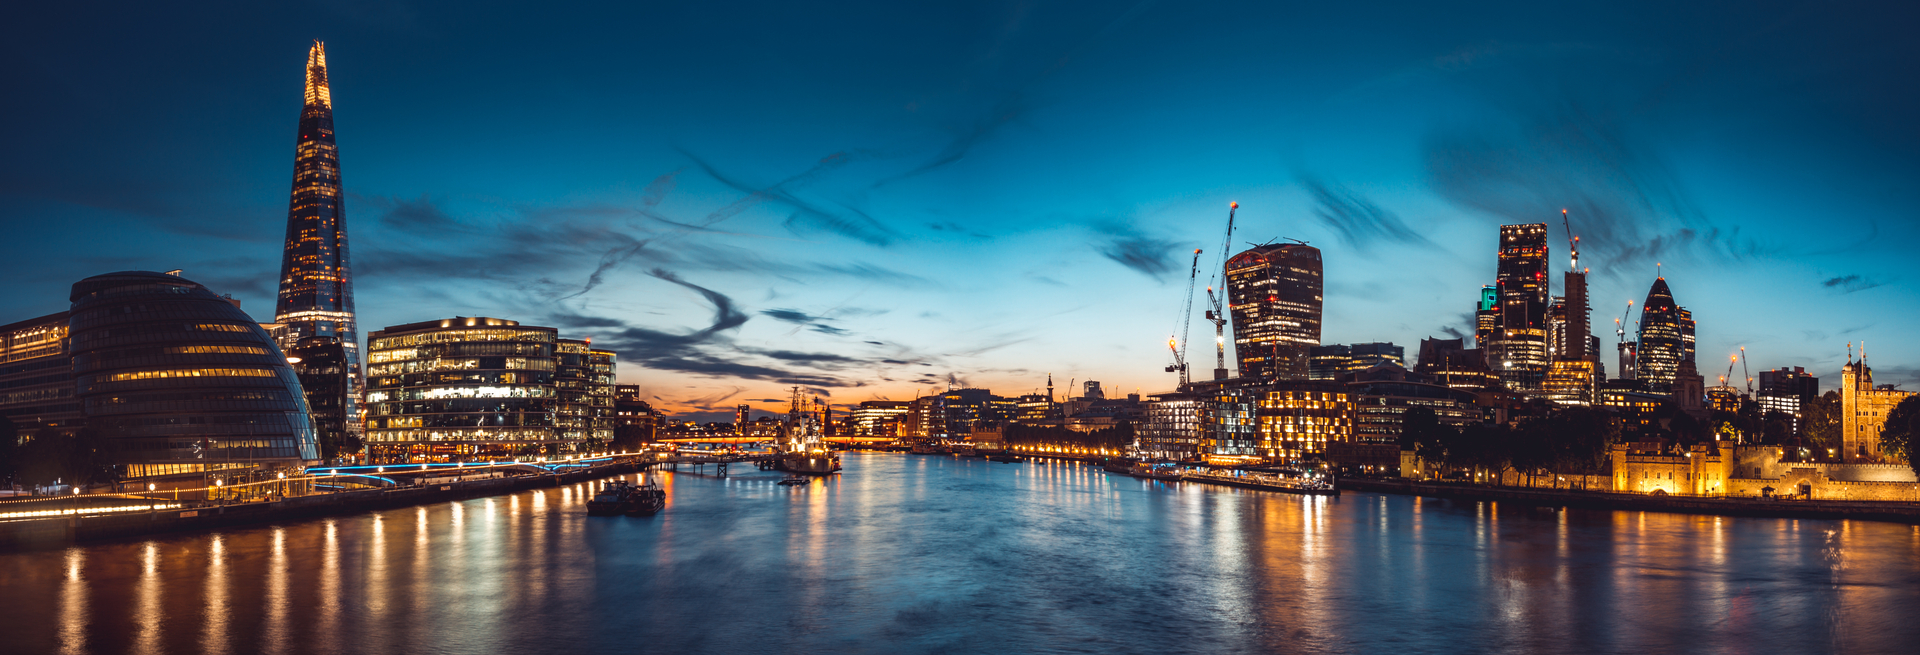 London_river_sunset